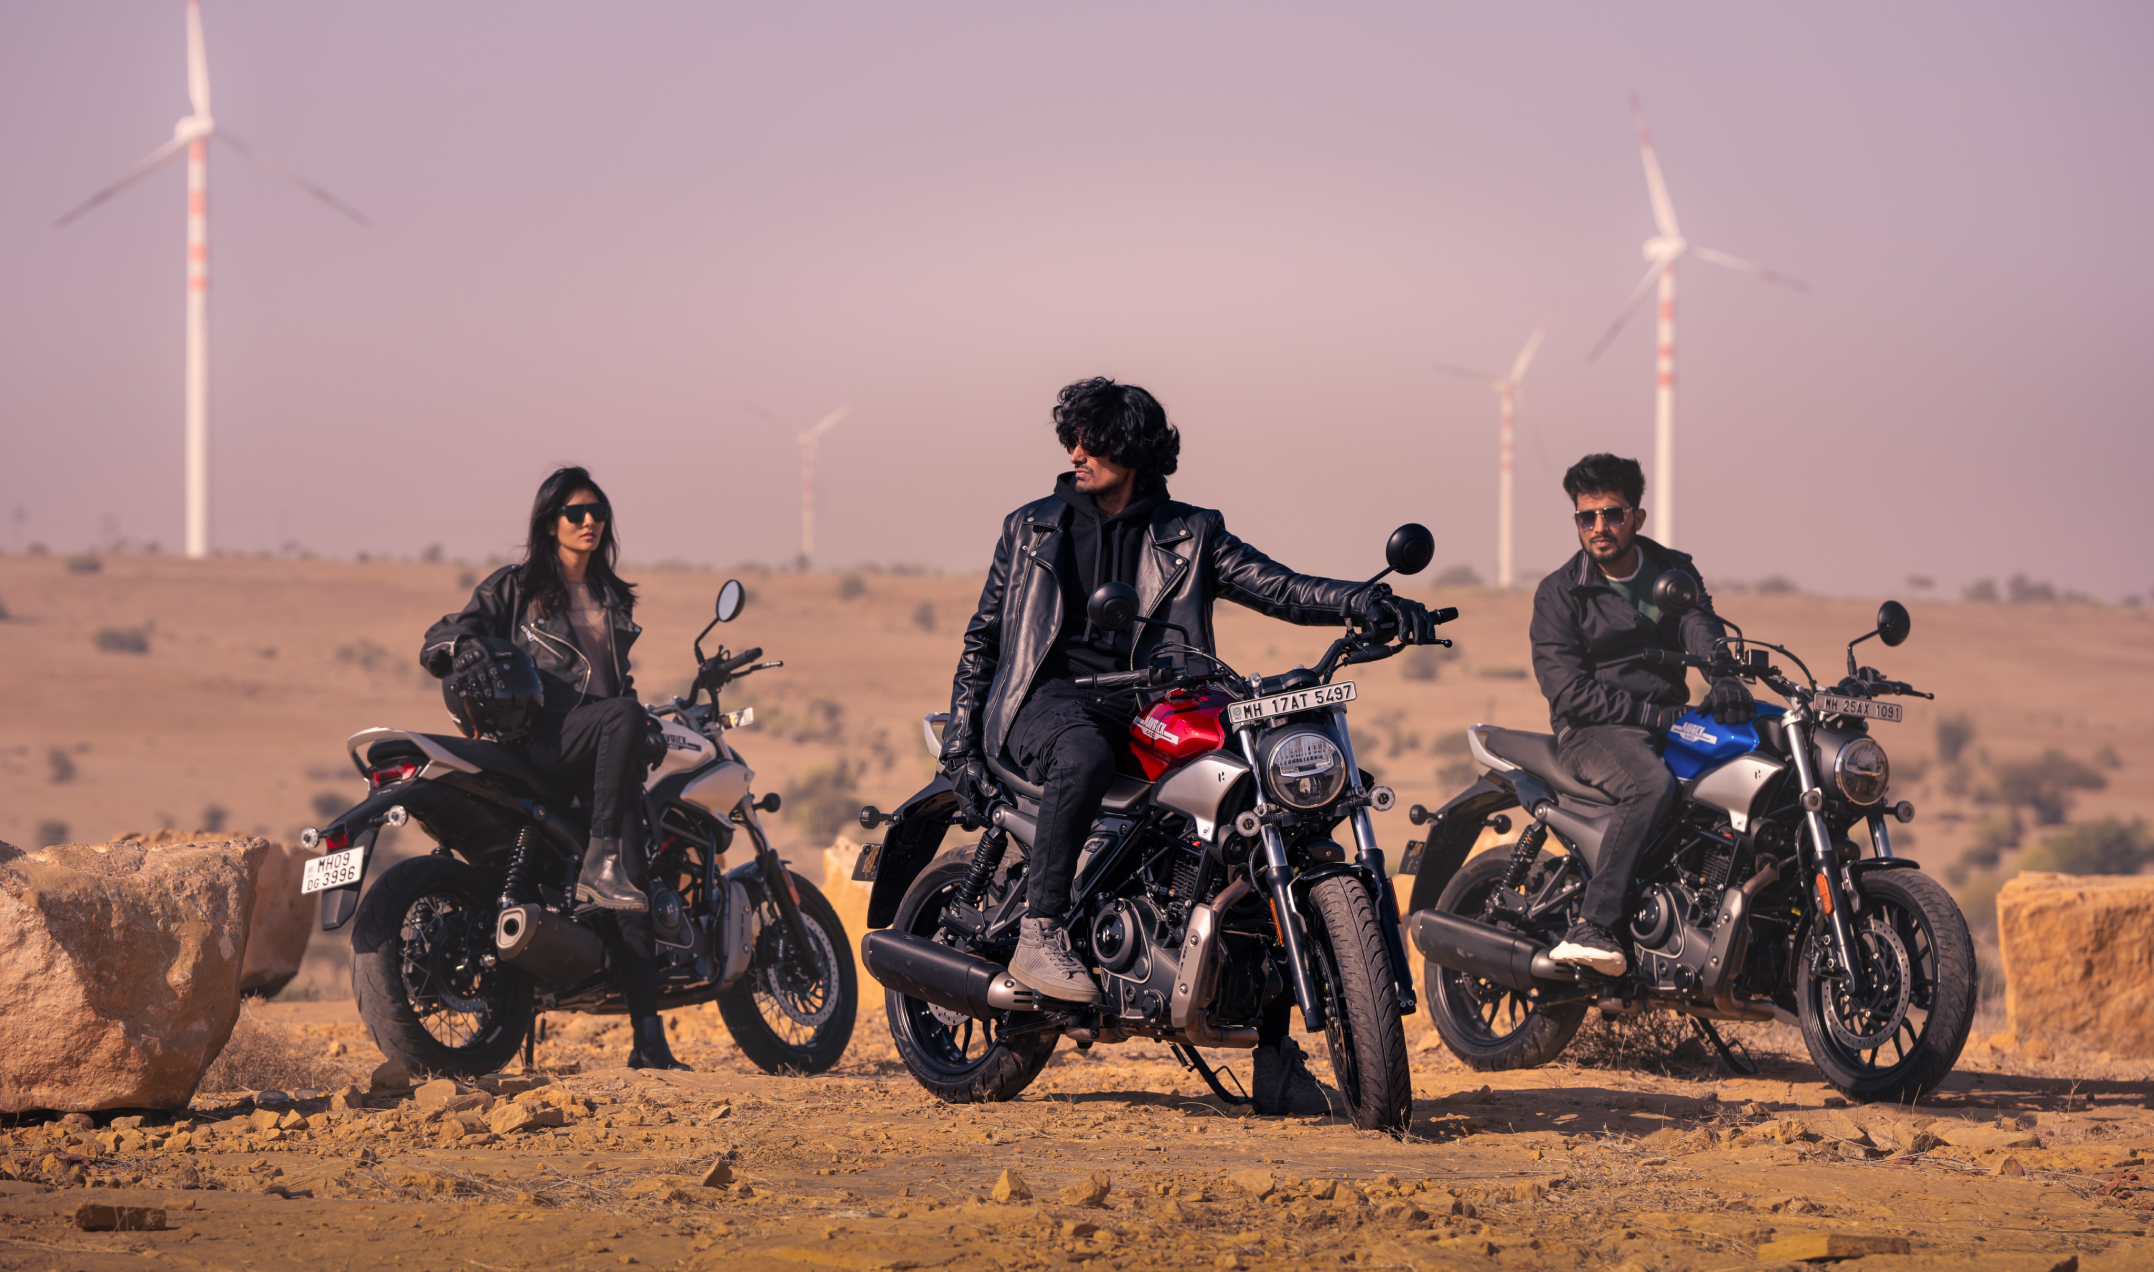 Hero MotoCorp是印度知名的小型摩托製造商